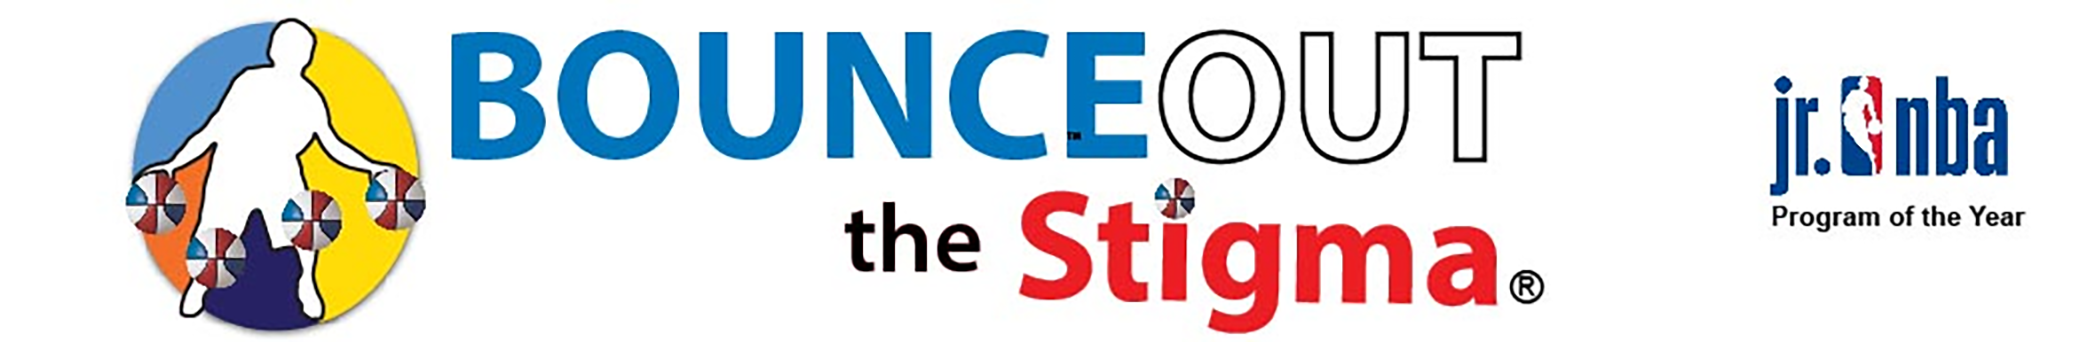 Bounce Out the Stigma Basketball Programs Logo